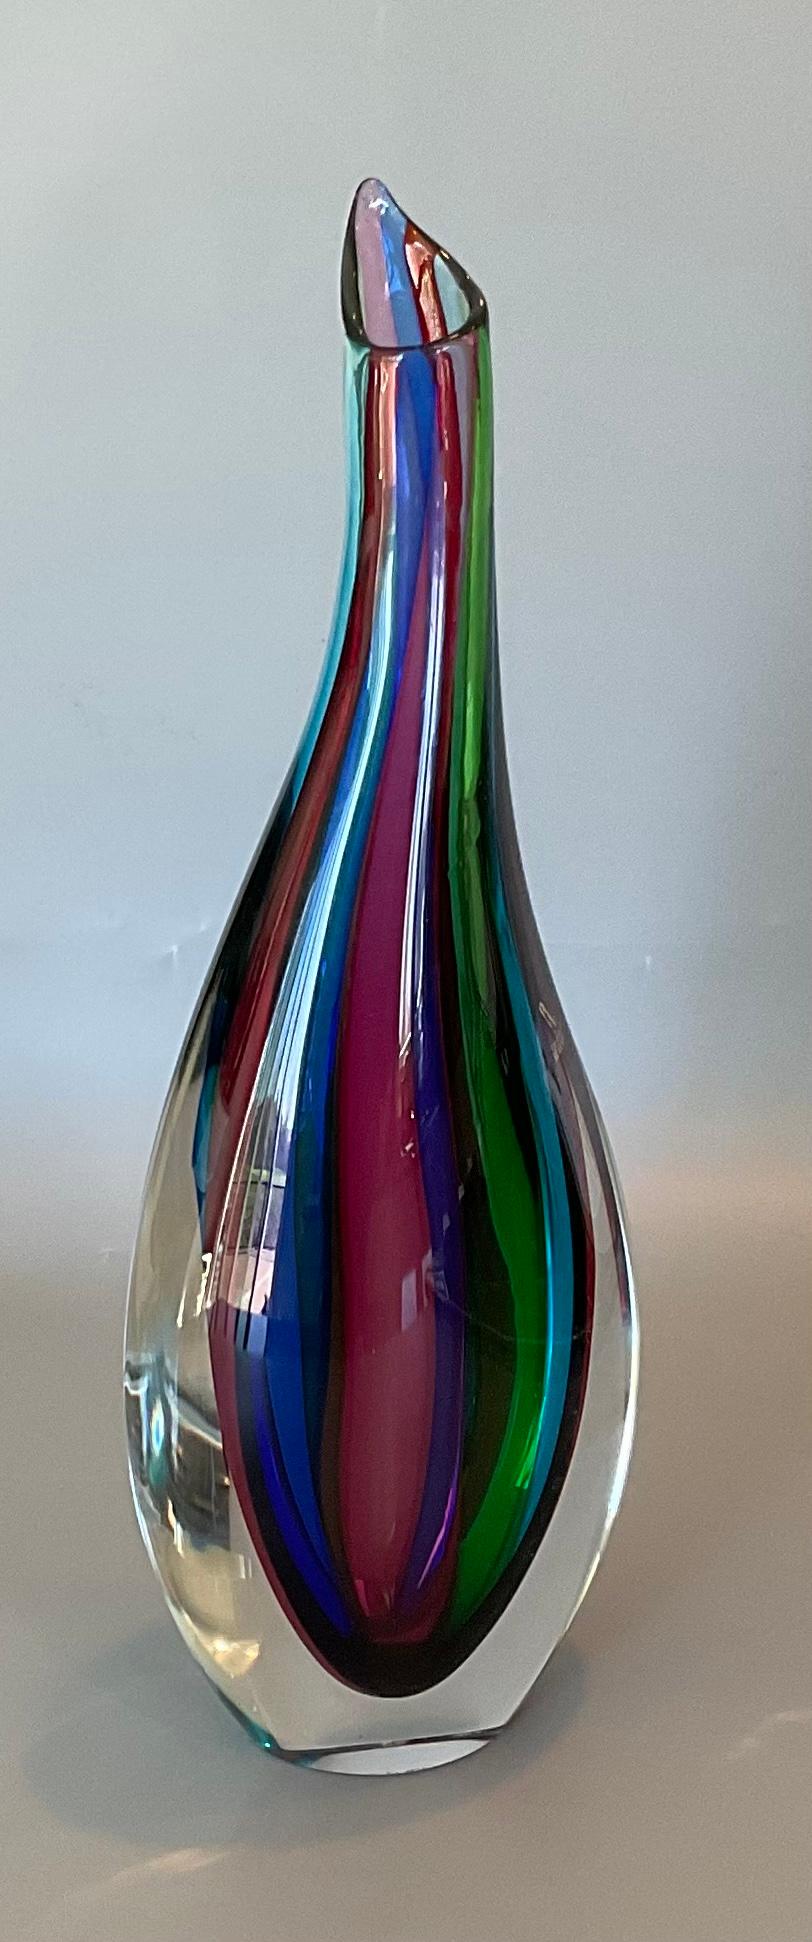 Giuliani Mian Murano Art Glass Vase Striped Multi Color Signed by the Artist In Good Condition For Sale In Ann Arbor, MI